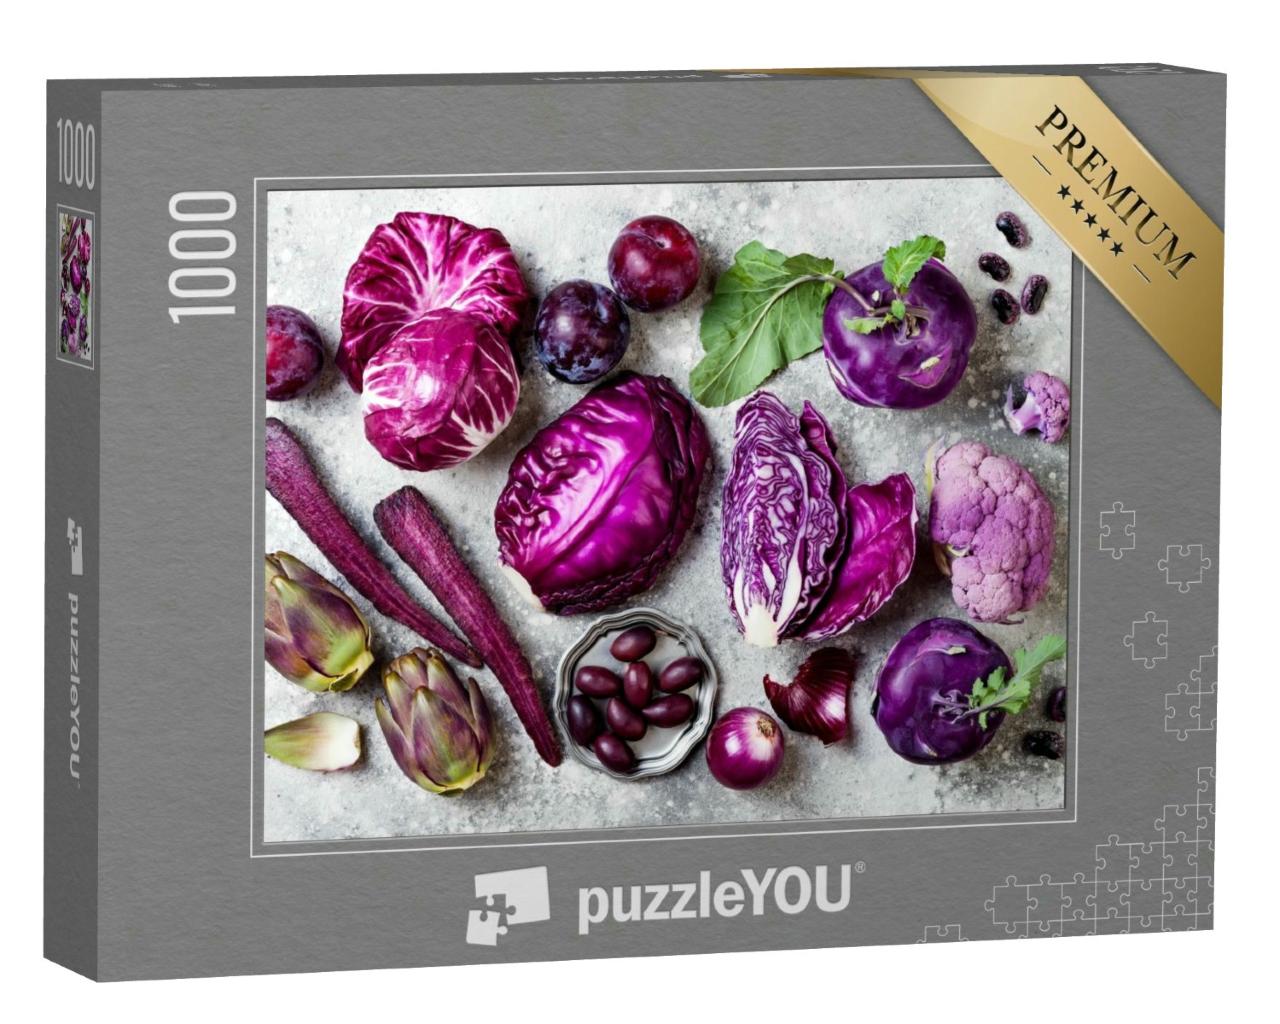 Puzzle 1000 Teile „Rohe lila Gemüse über grauem Beton“